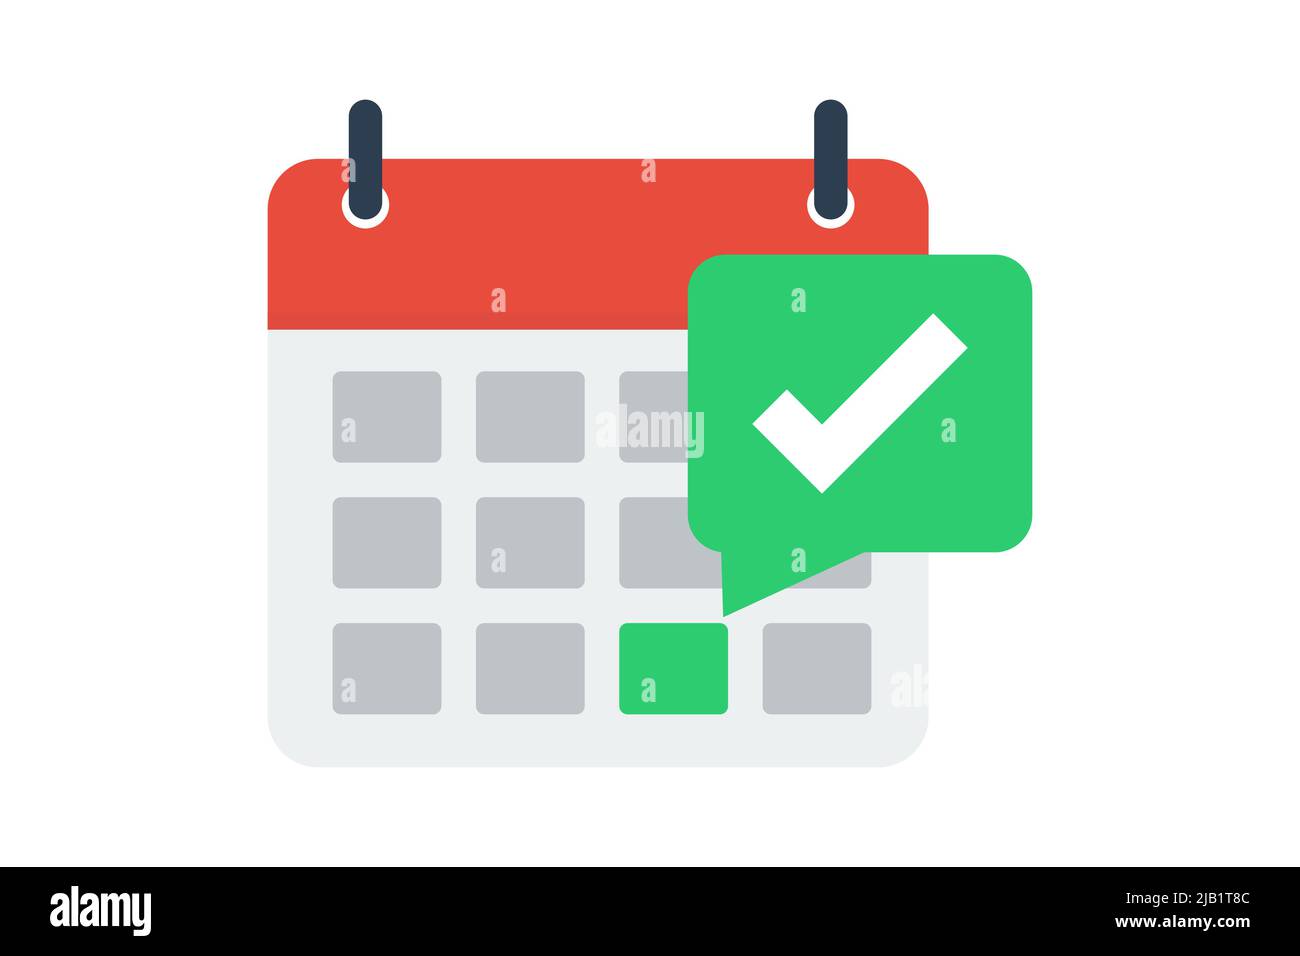 Calendar icon with check mark. Success, approve, complete, goal concept. Stock Vector